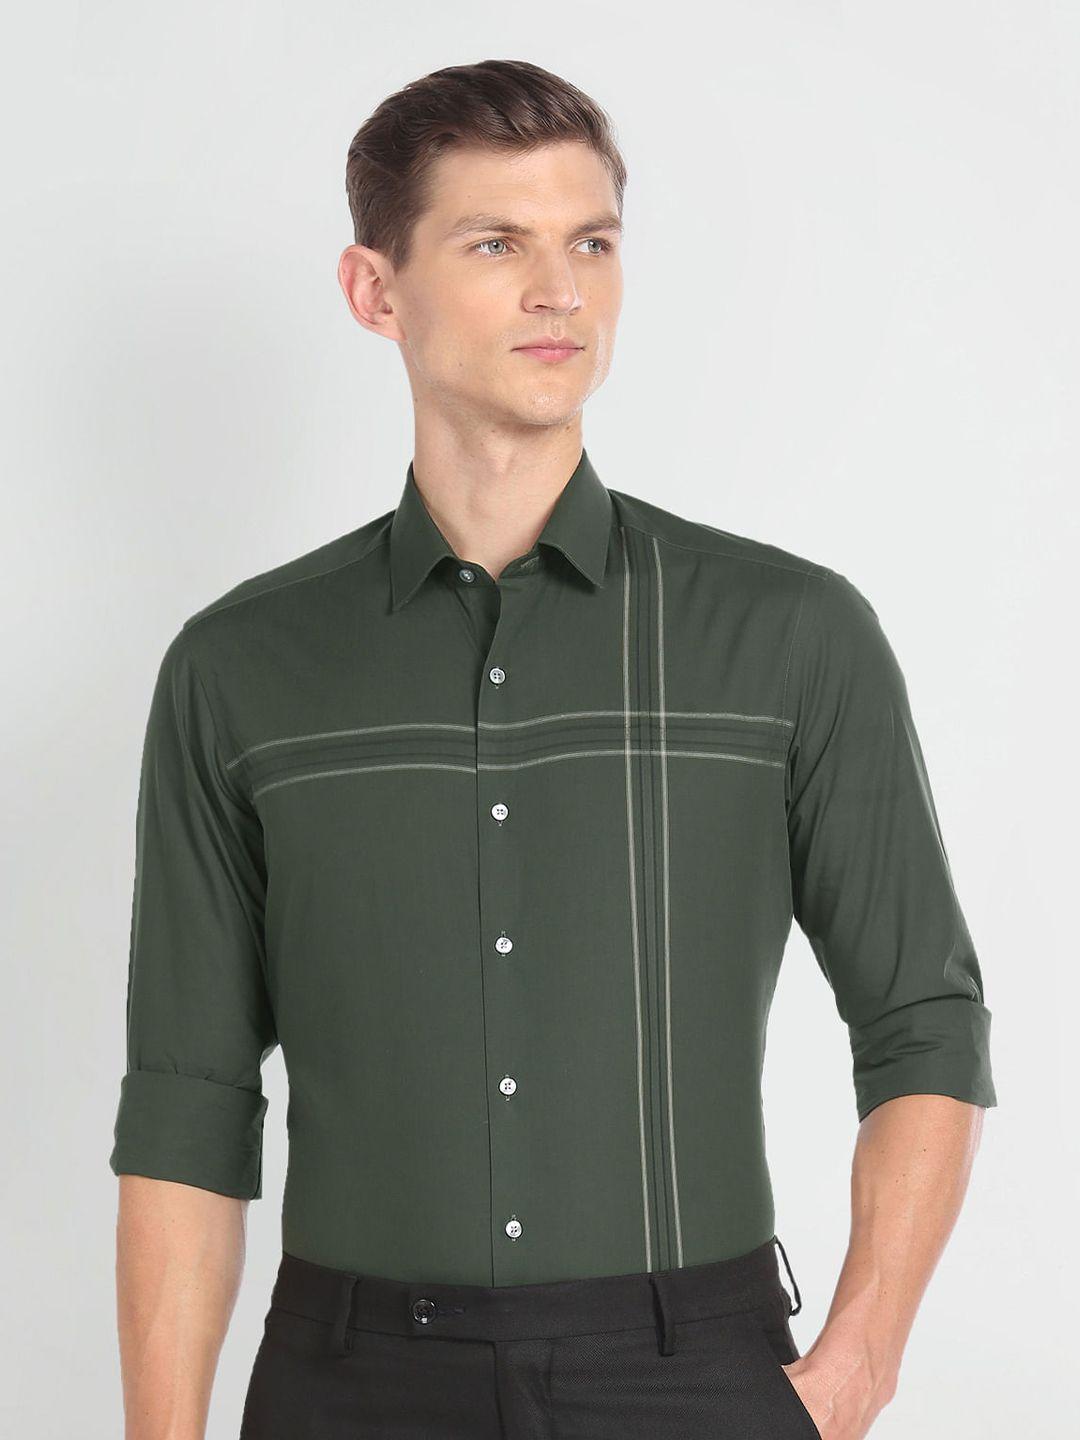 arrow slim fit vertical striped spread collar pure cotton formal shirt